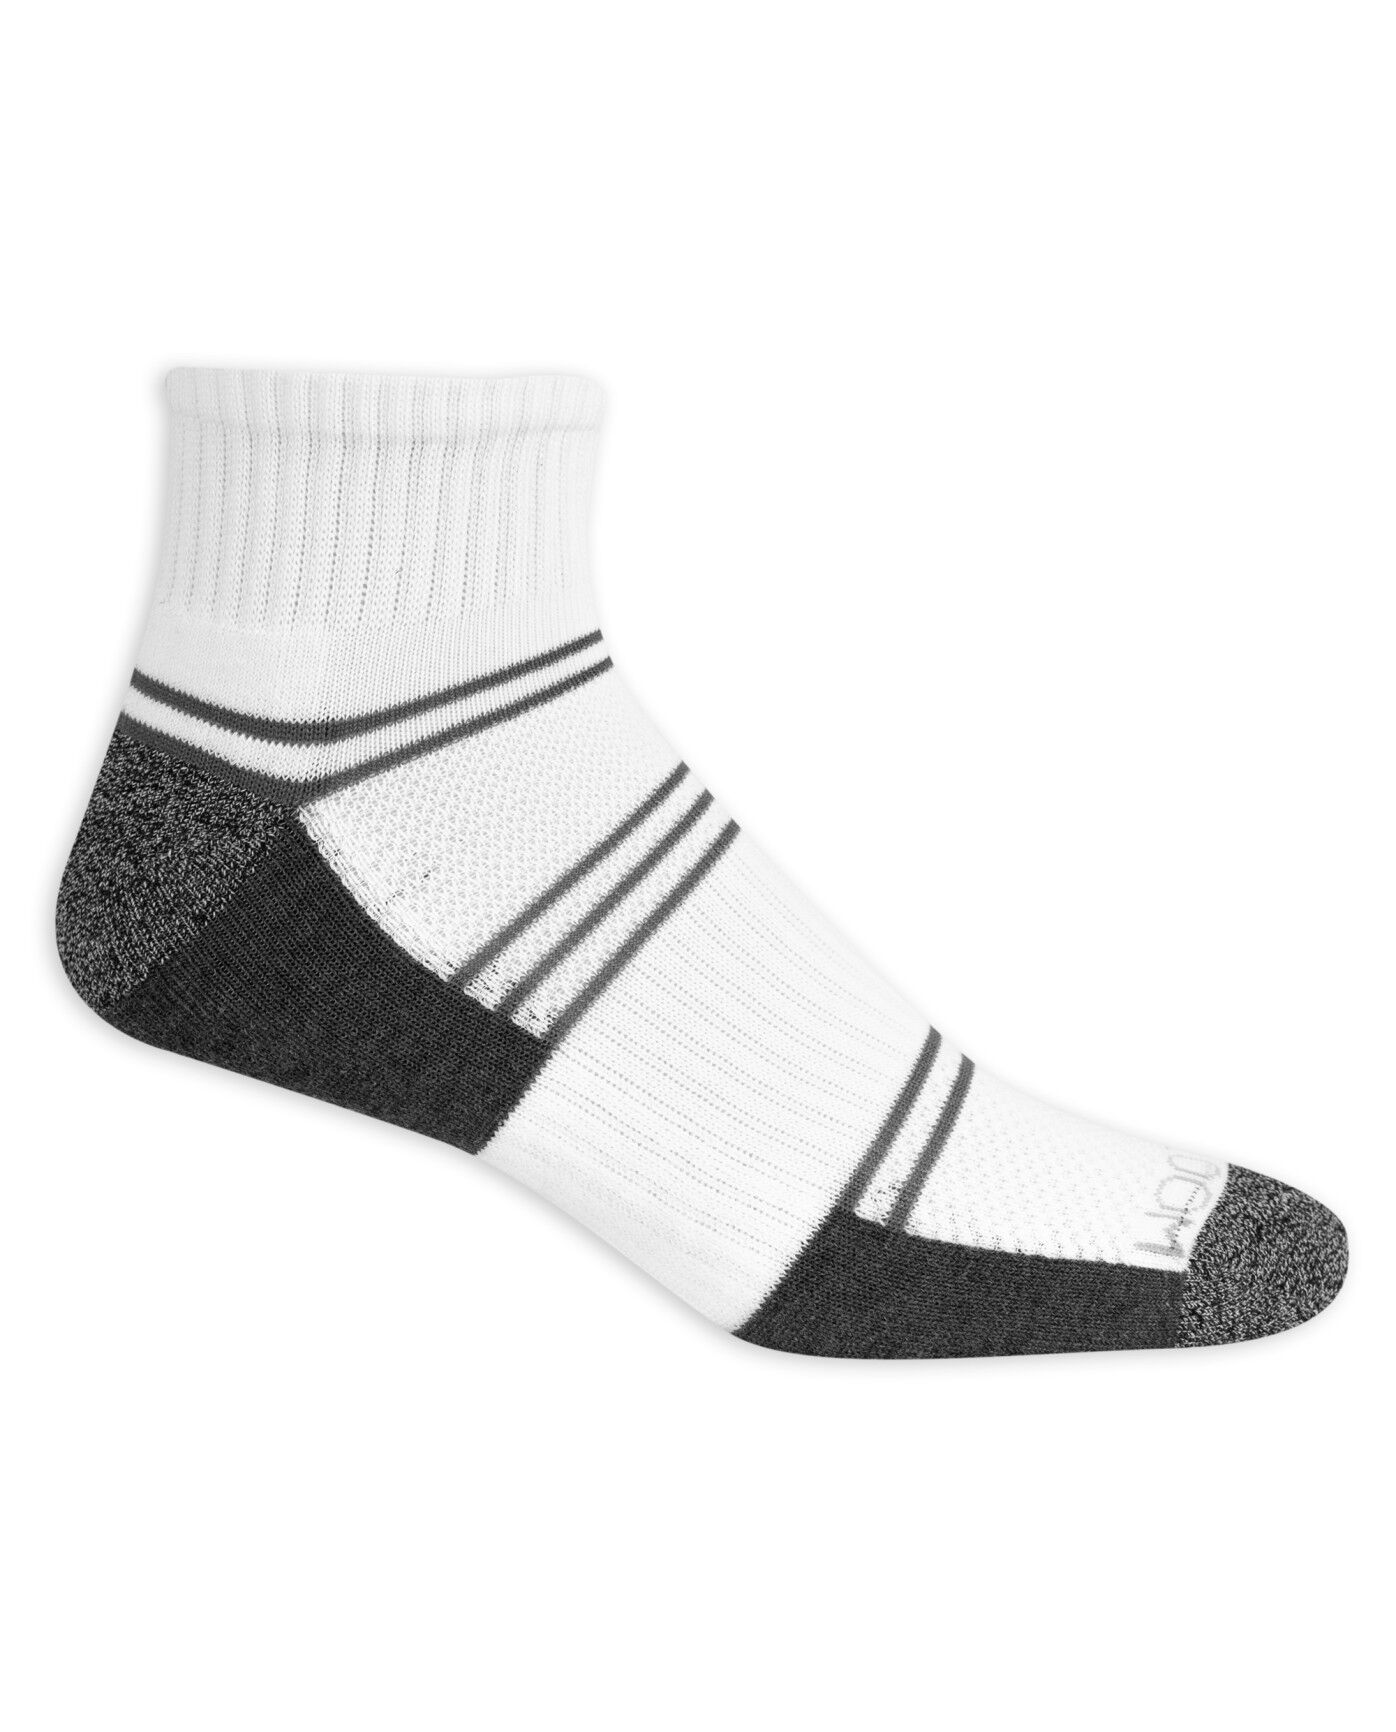 Men's Breathable Ankle Socks, 8 Pack, Size 6-12